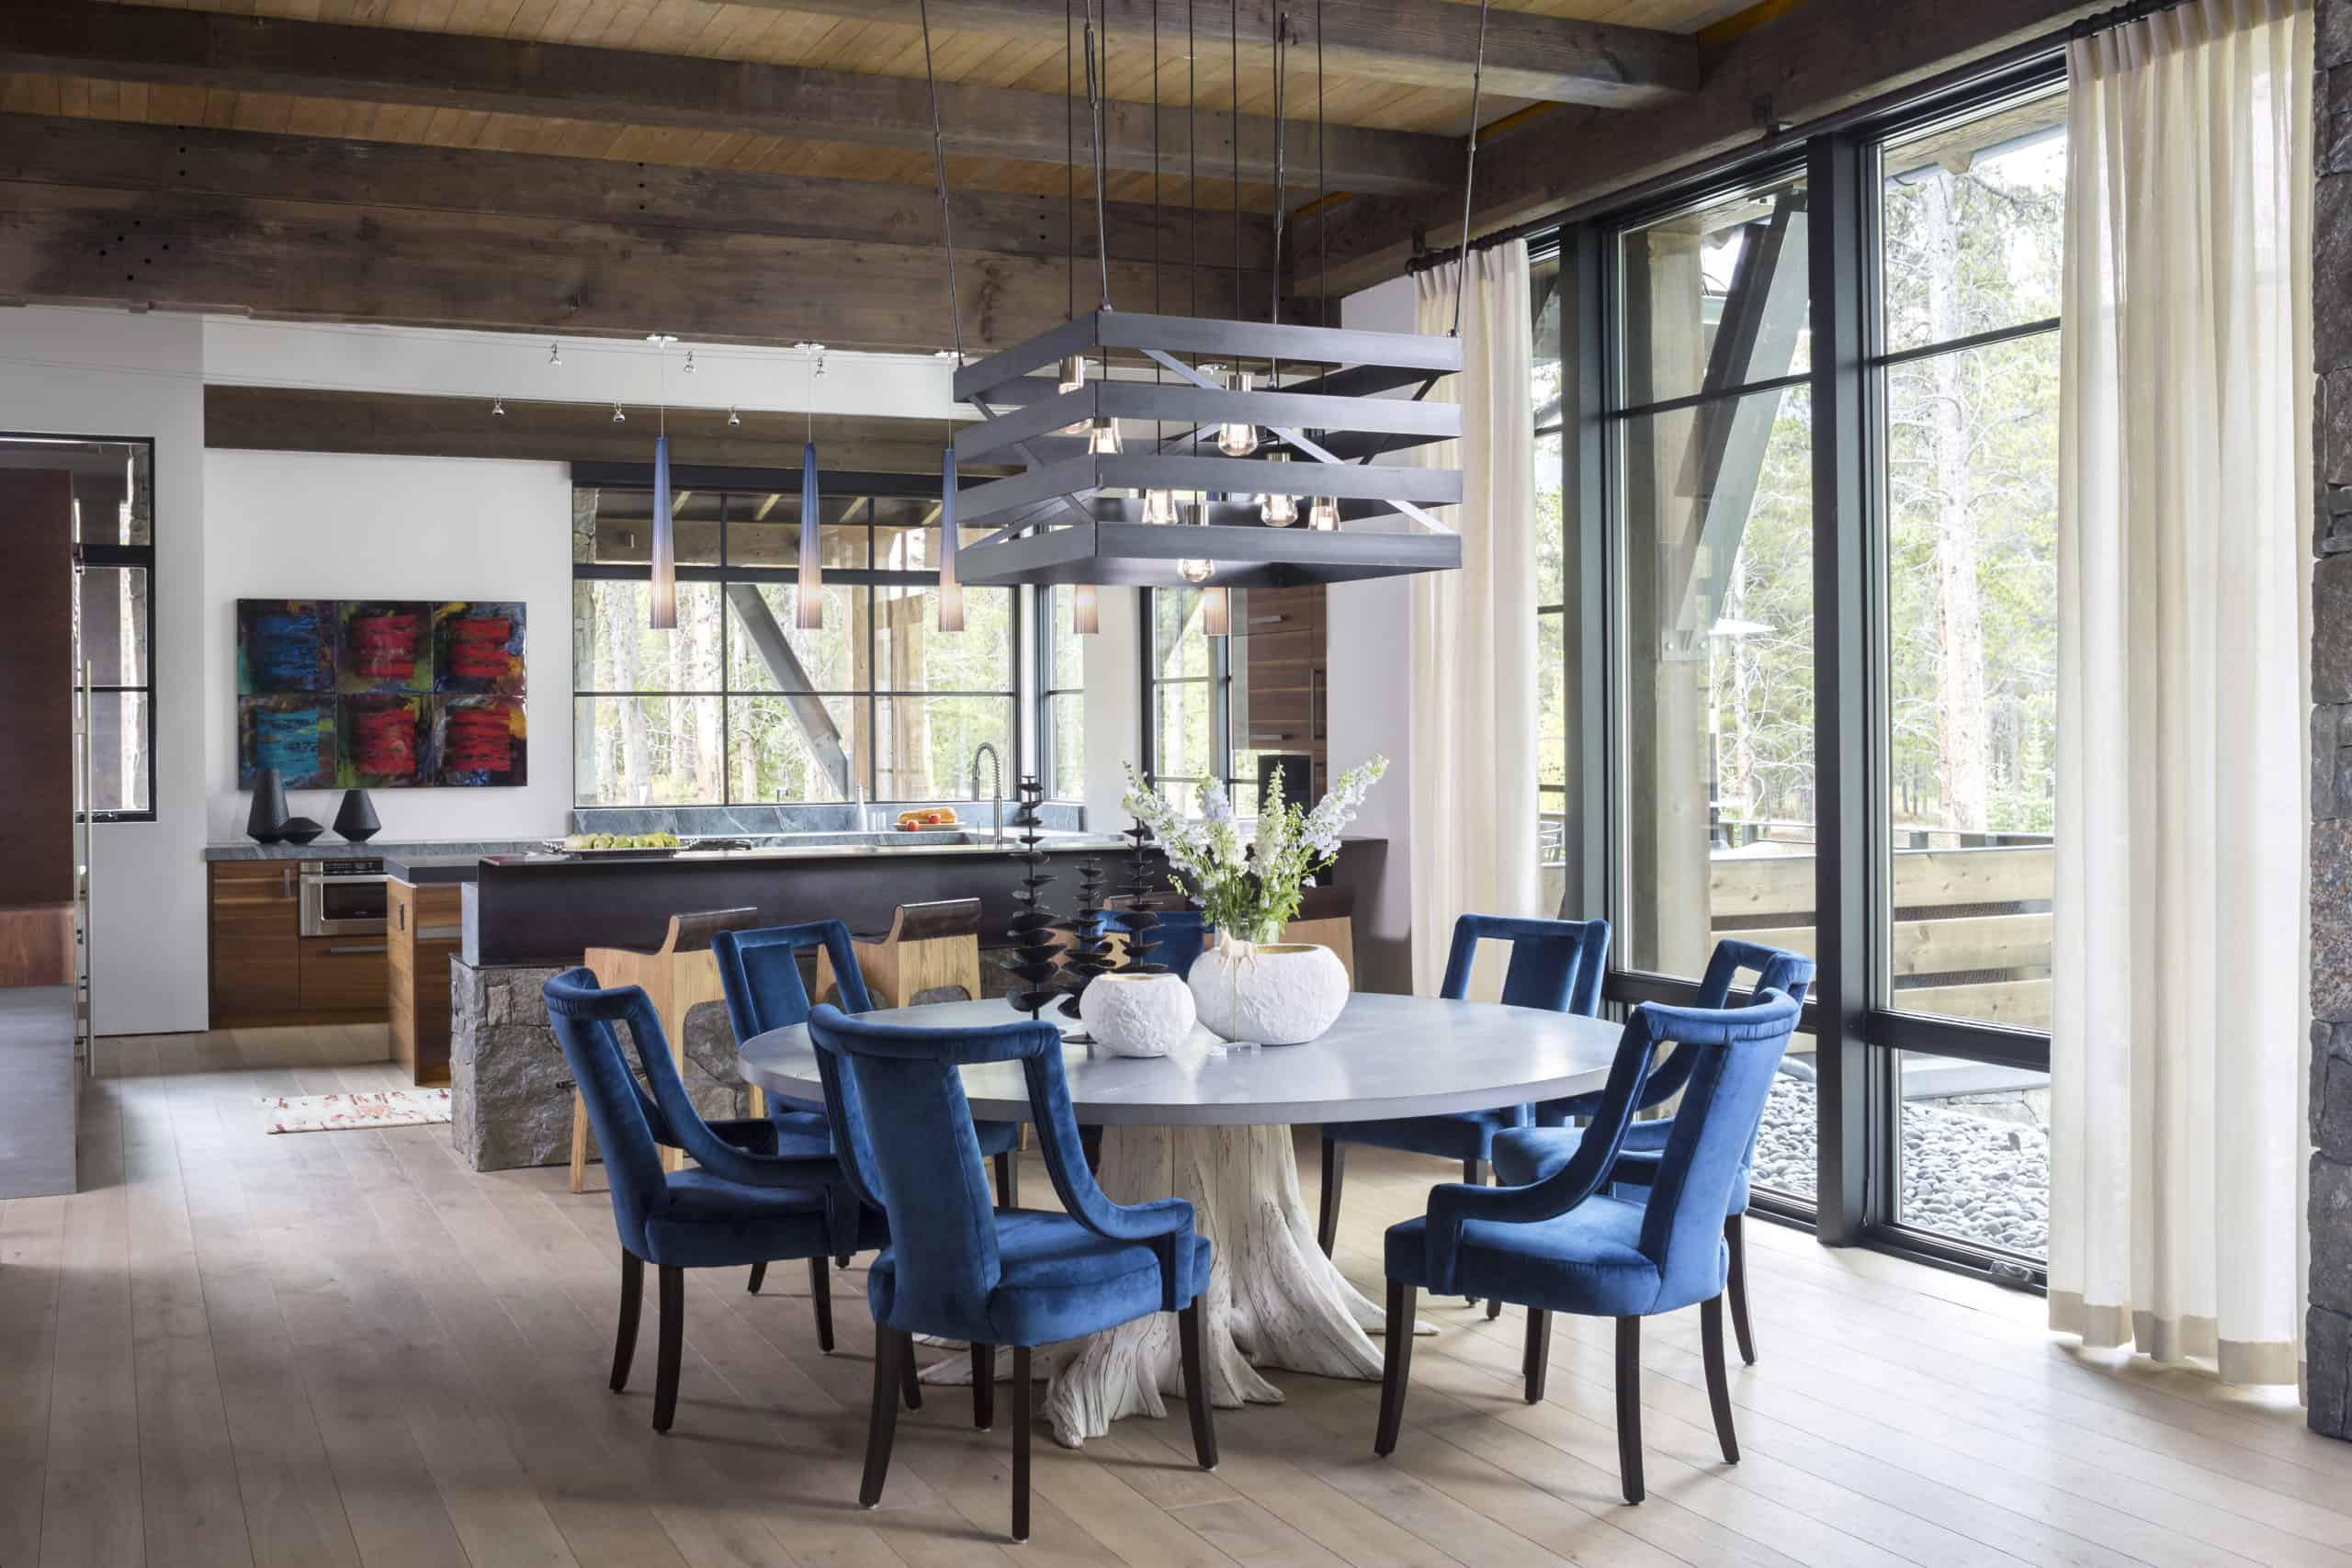 Rustic modern dining room furniture chosen by Denver interior designer